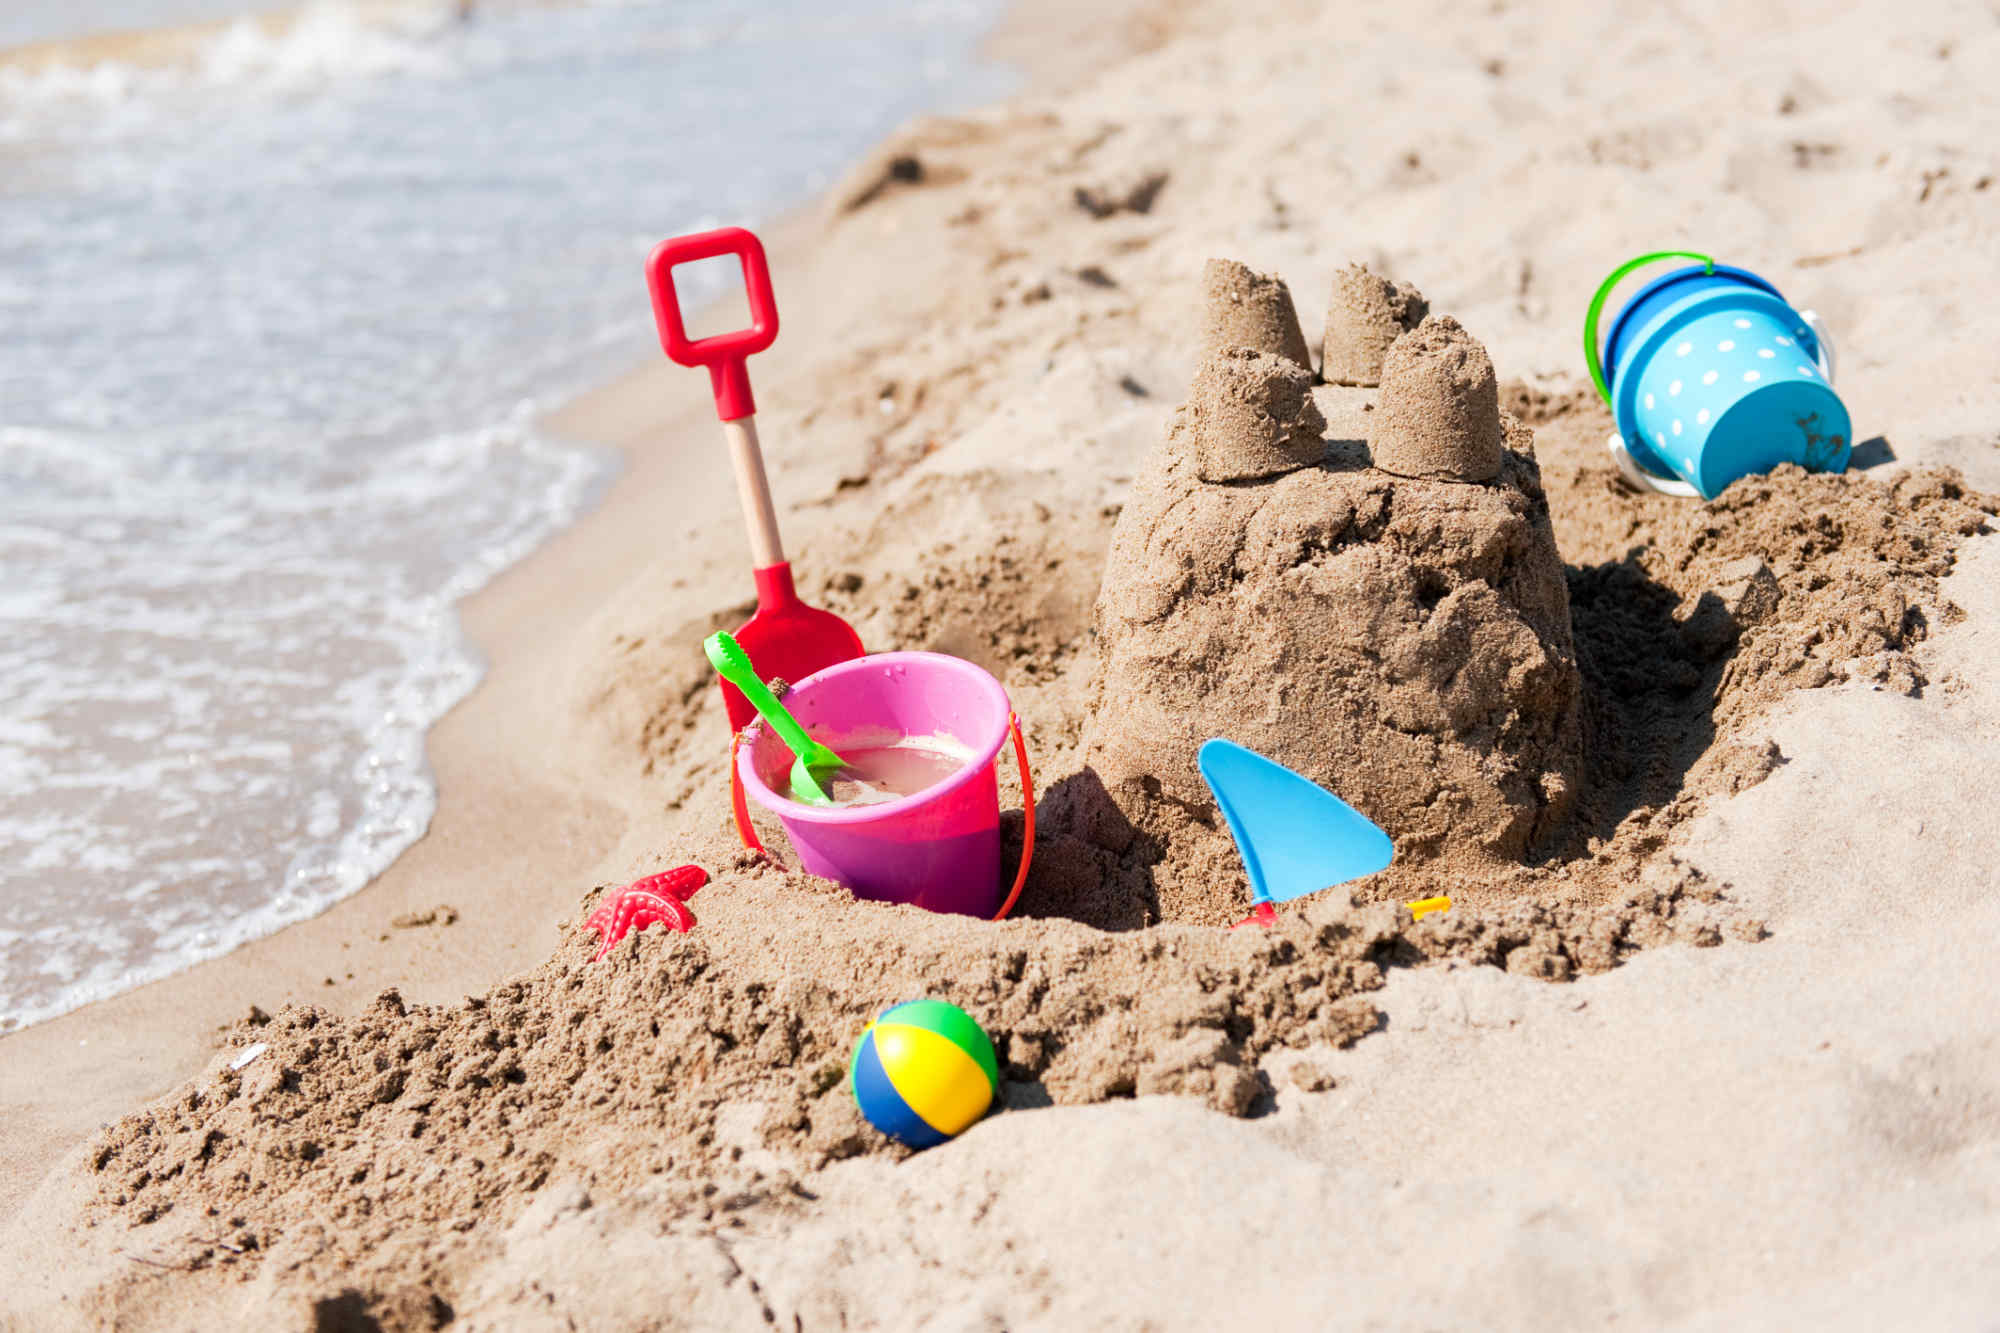 sand castle on the beach built by a child